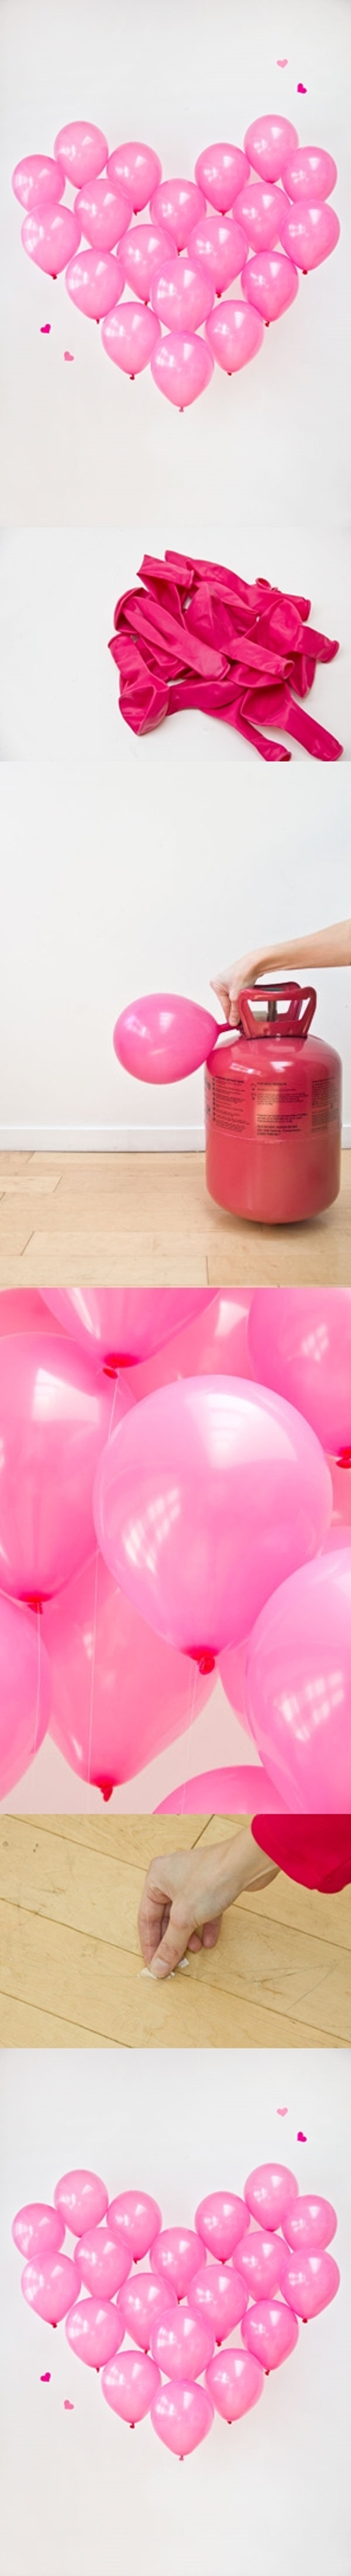 Diy Abkürzung
 DIY gefüllte Luftballons Deko Ideen perfekte Partyartikel